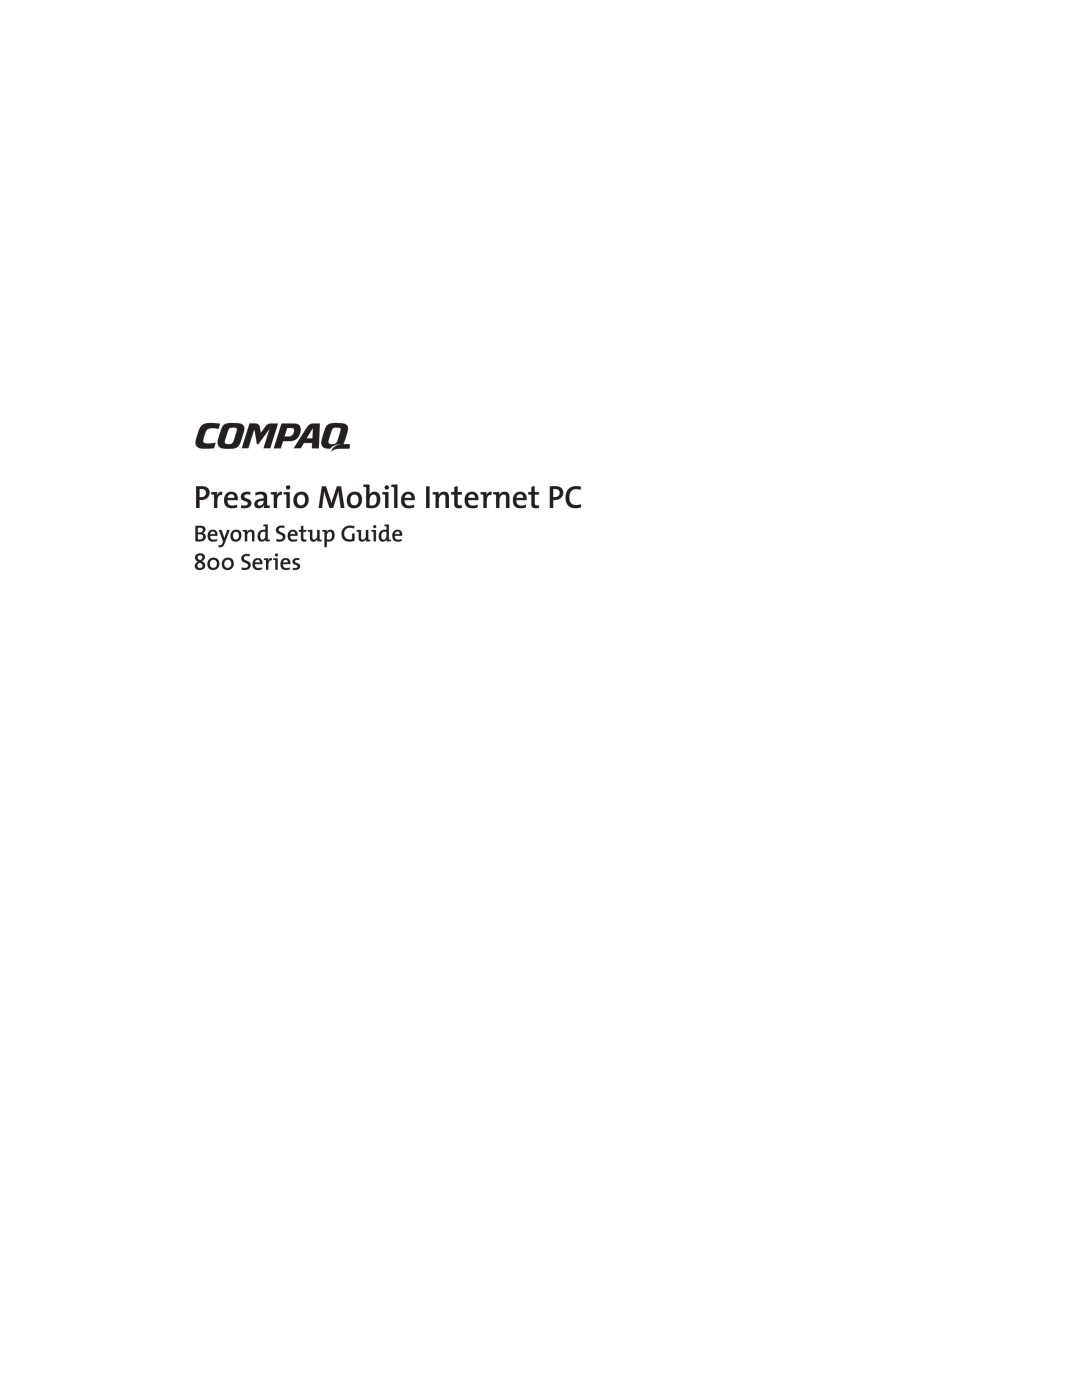 Compaq manual Presario Mobile Internet PC, Beyond Setup Guide 800 Series 